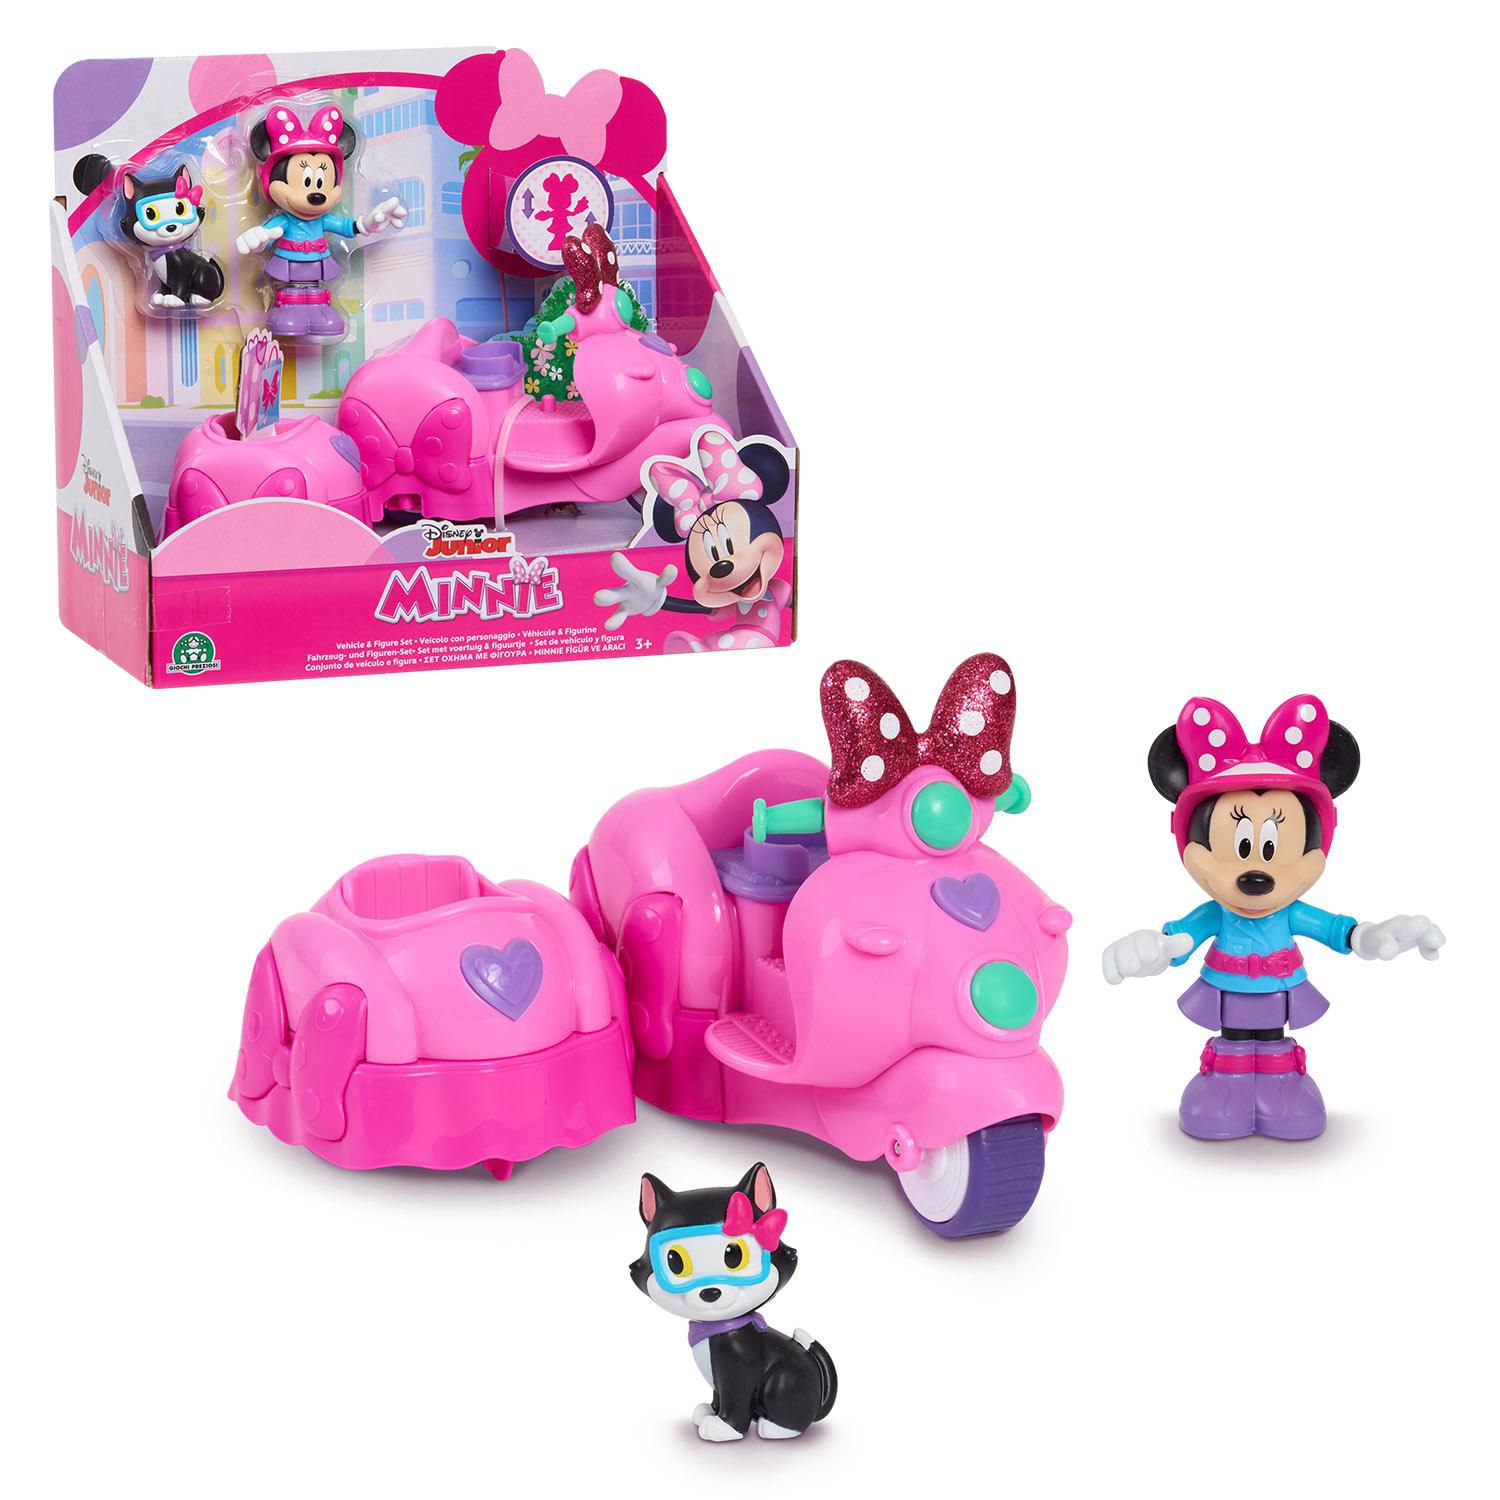 Disney Junior Minnie Mouse Vehicle & Figure Set, Scooter, Includes 